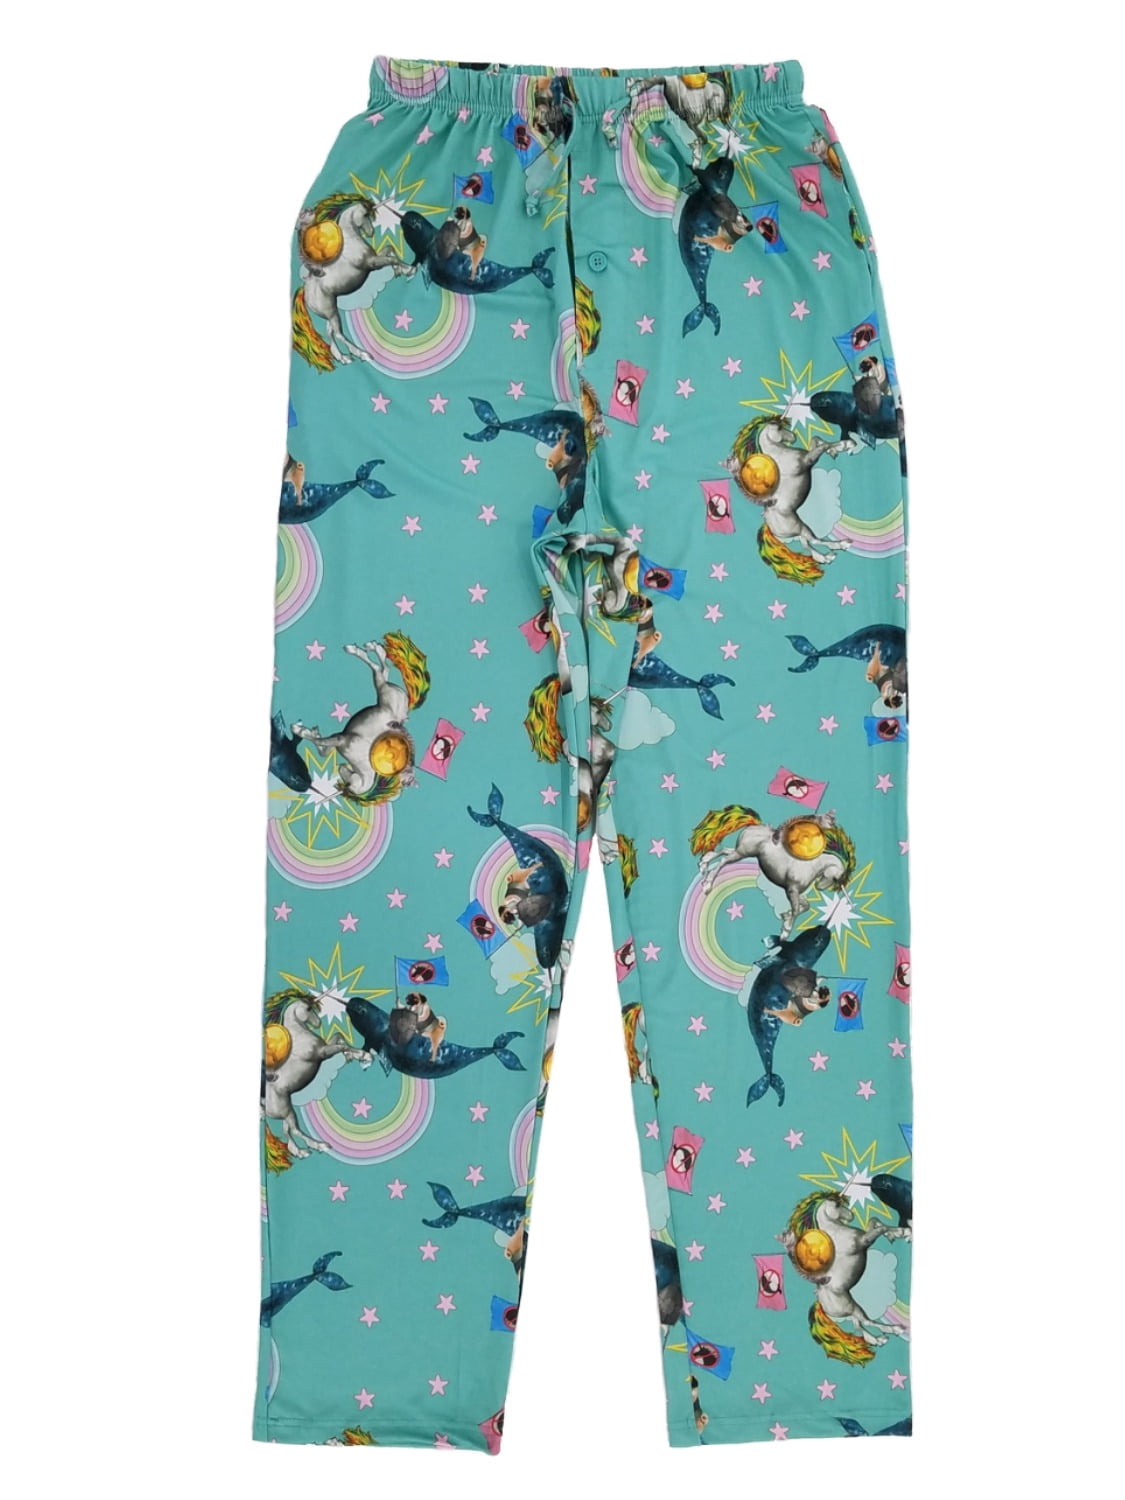 Mens Rainbow Cat Unicorn Pug Whale Battle Sleep Pants Pajama Bottoms S